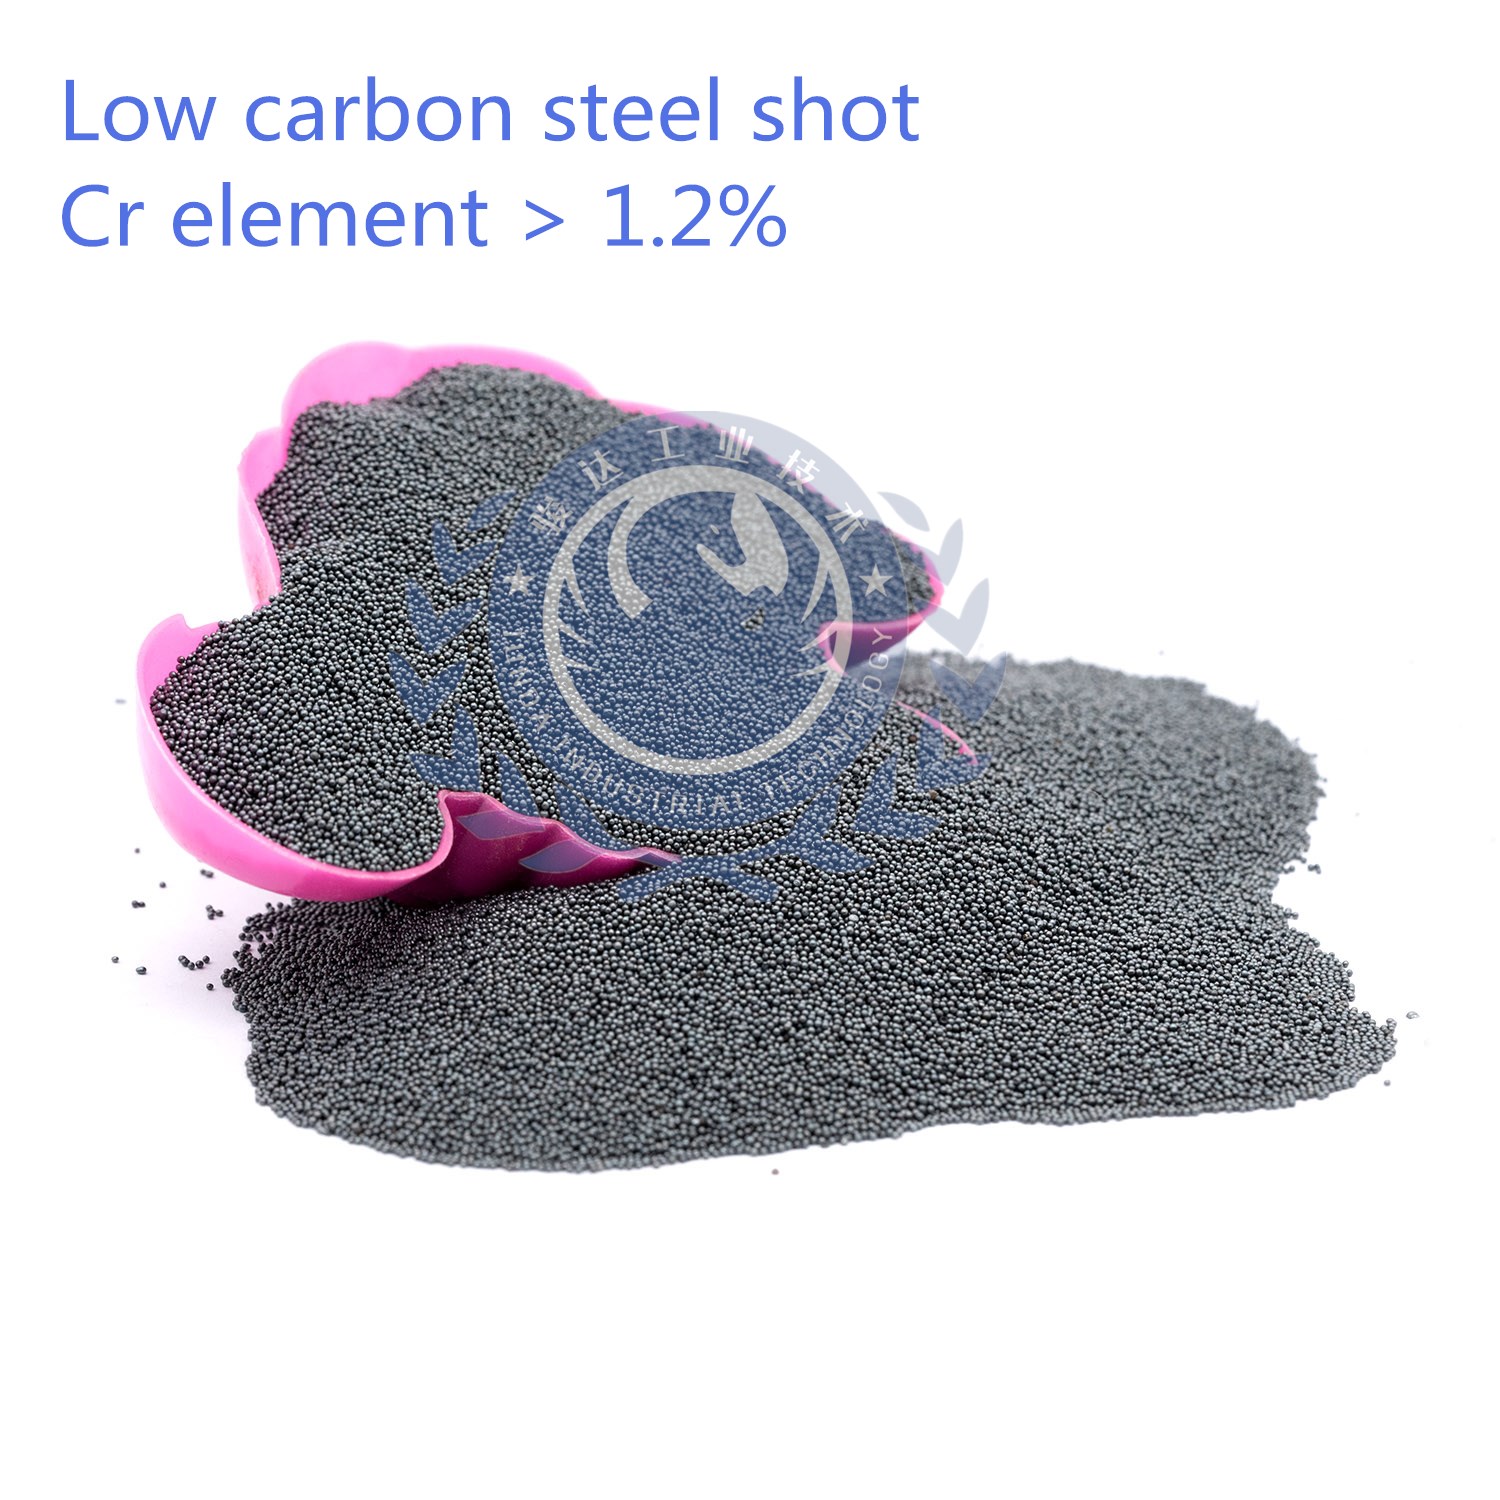 Low carbon steel shot